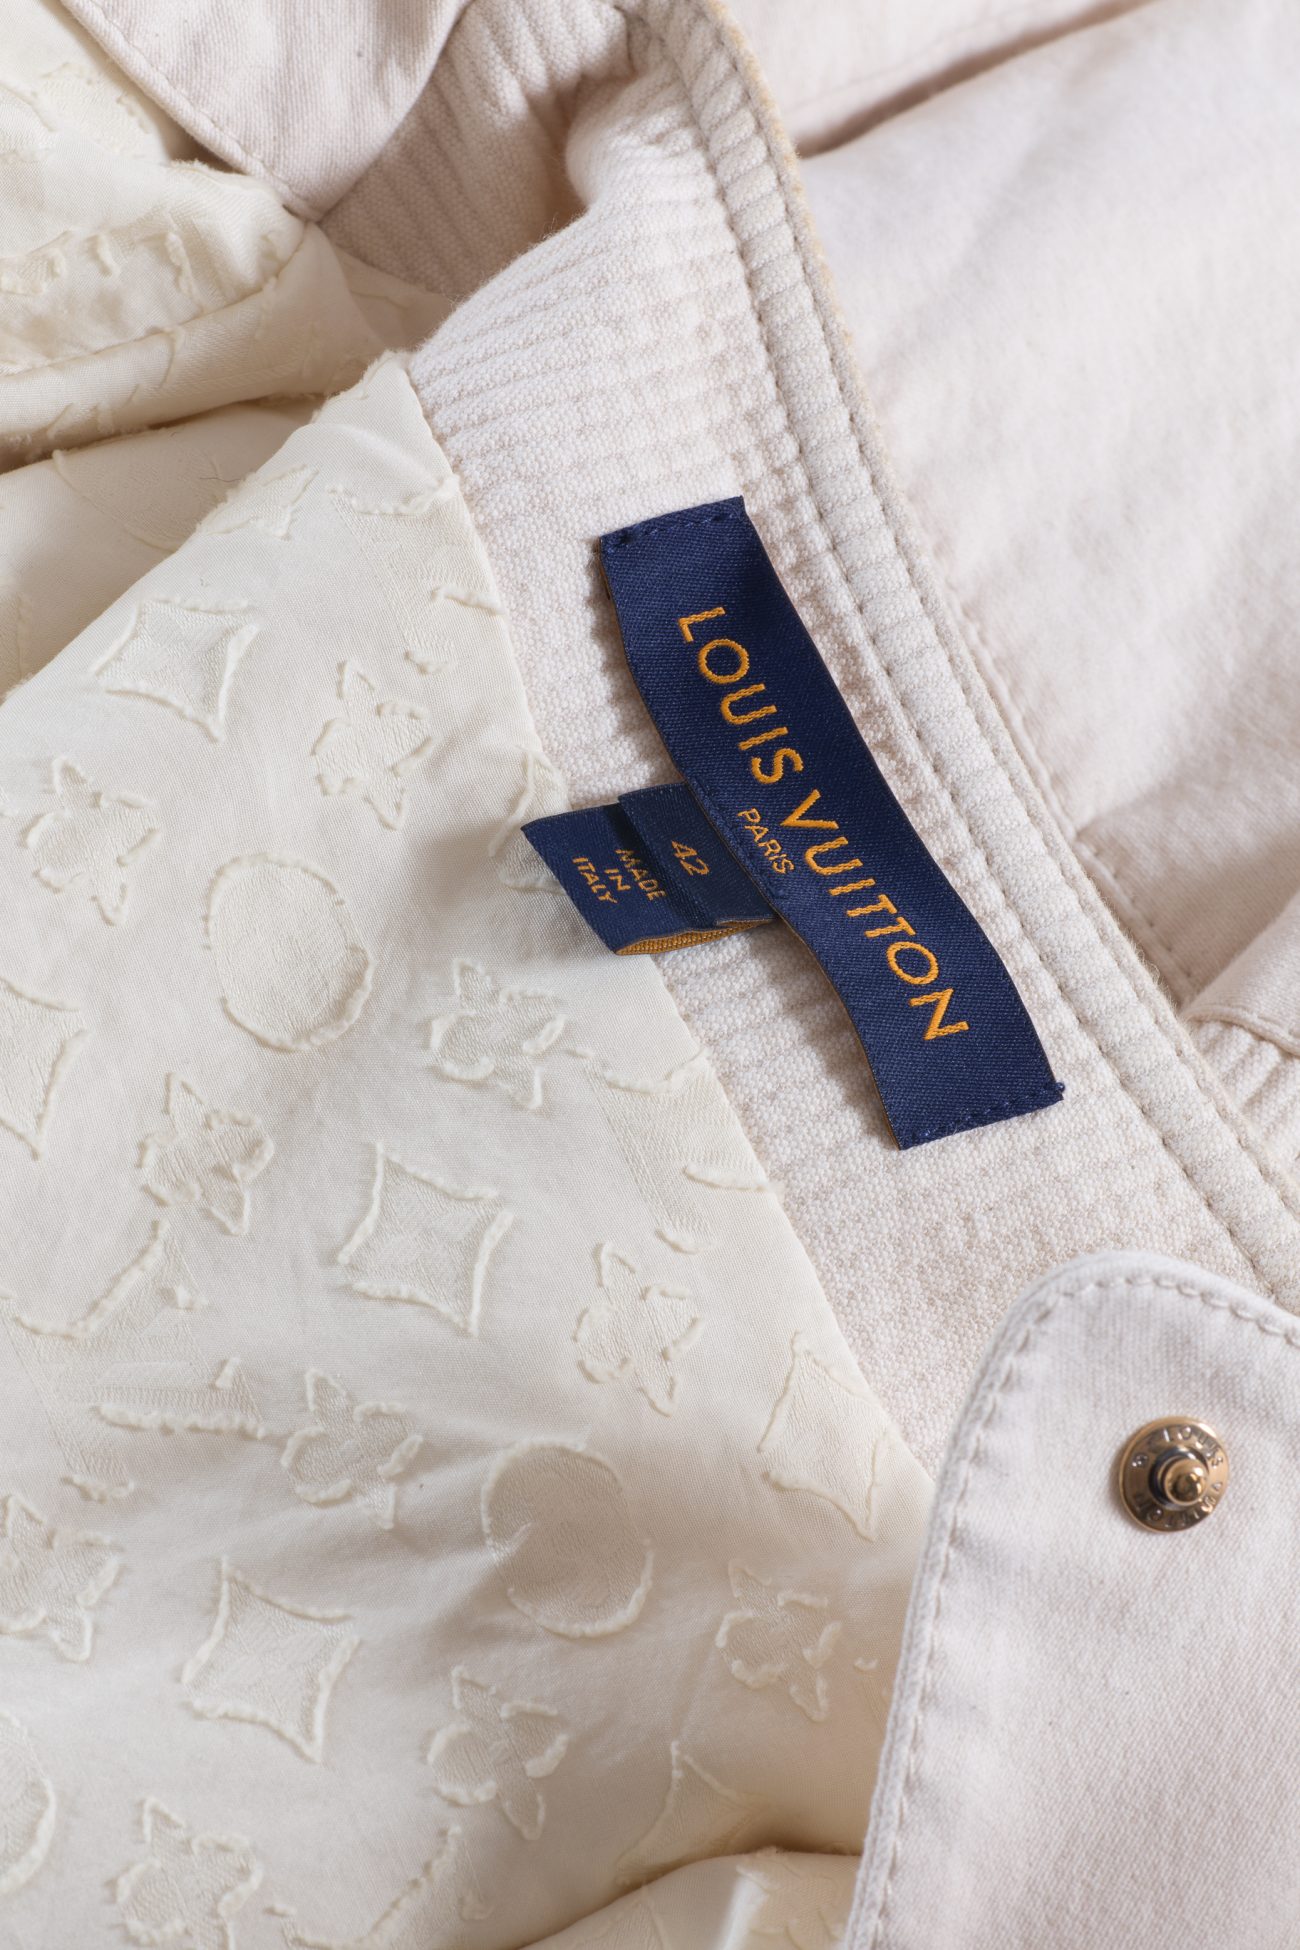 Louis Vuitton Jacket, FR42 - Huntessa Luxury Online Consignment